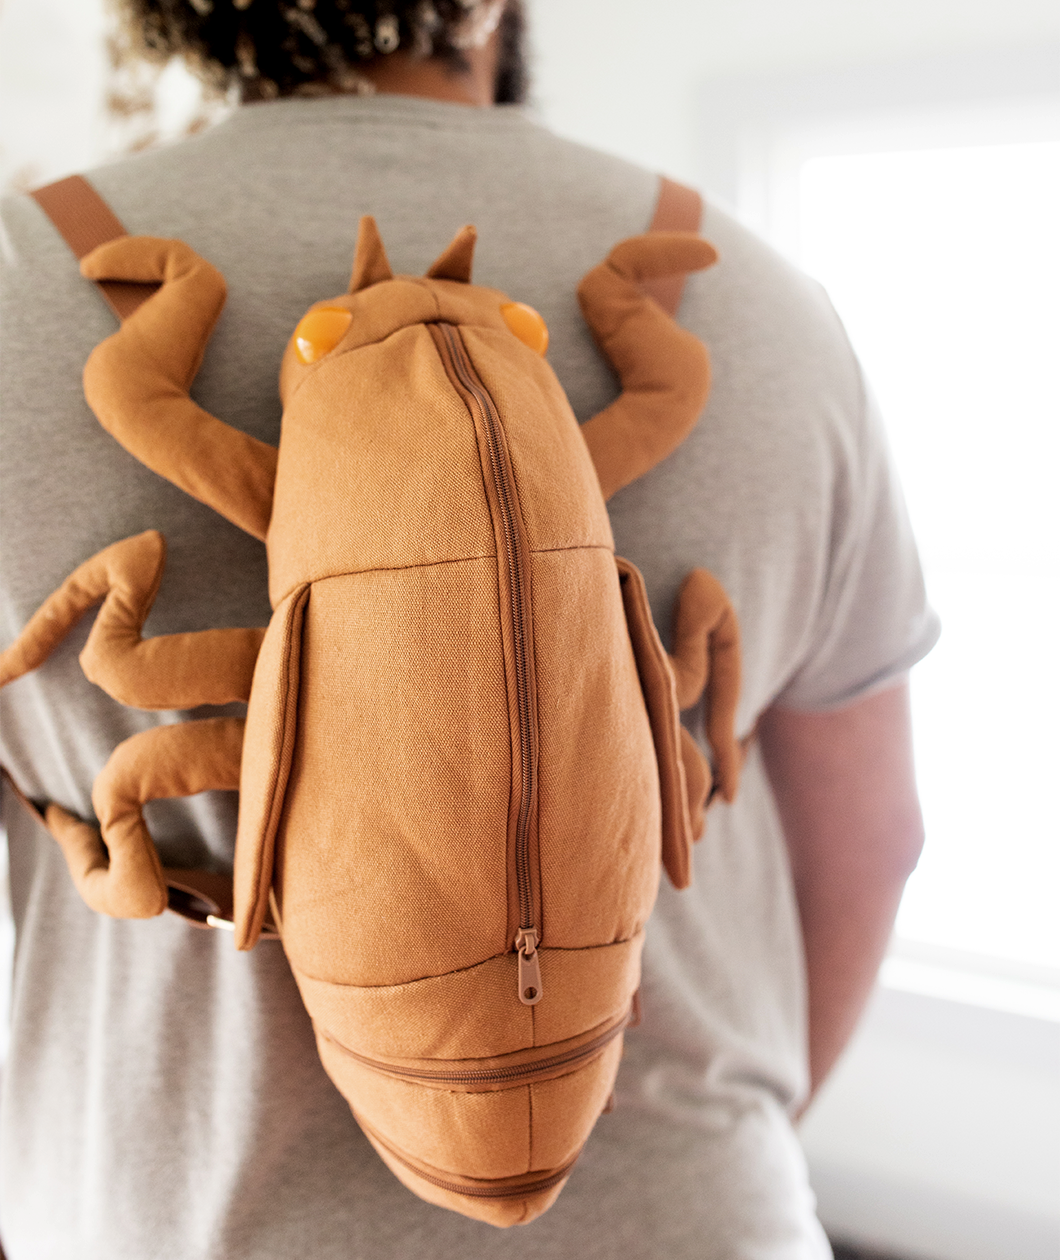 Man wearing cicada shell shaped backpack.